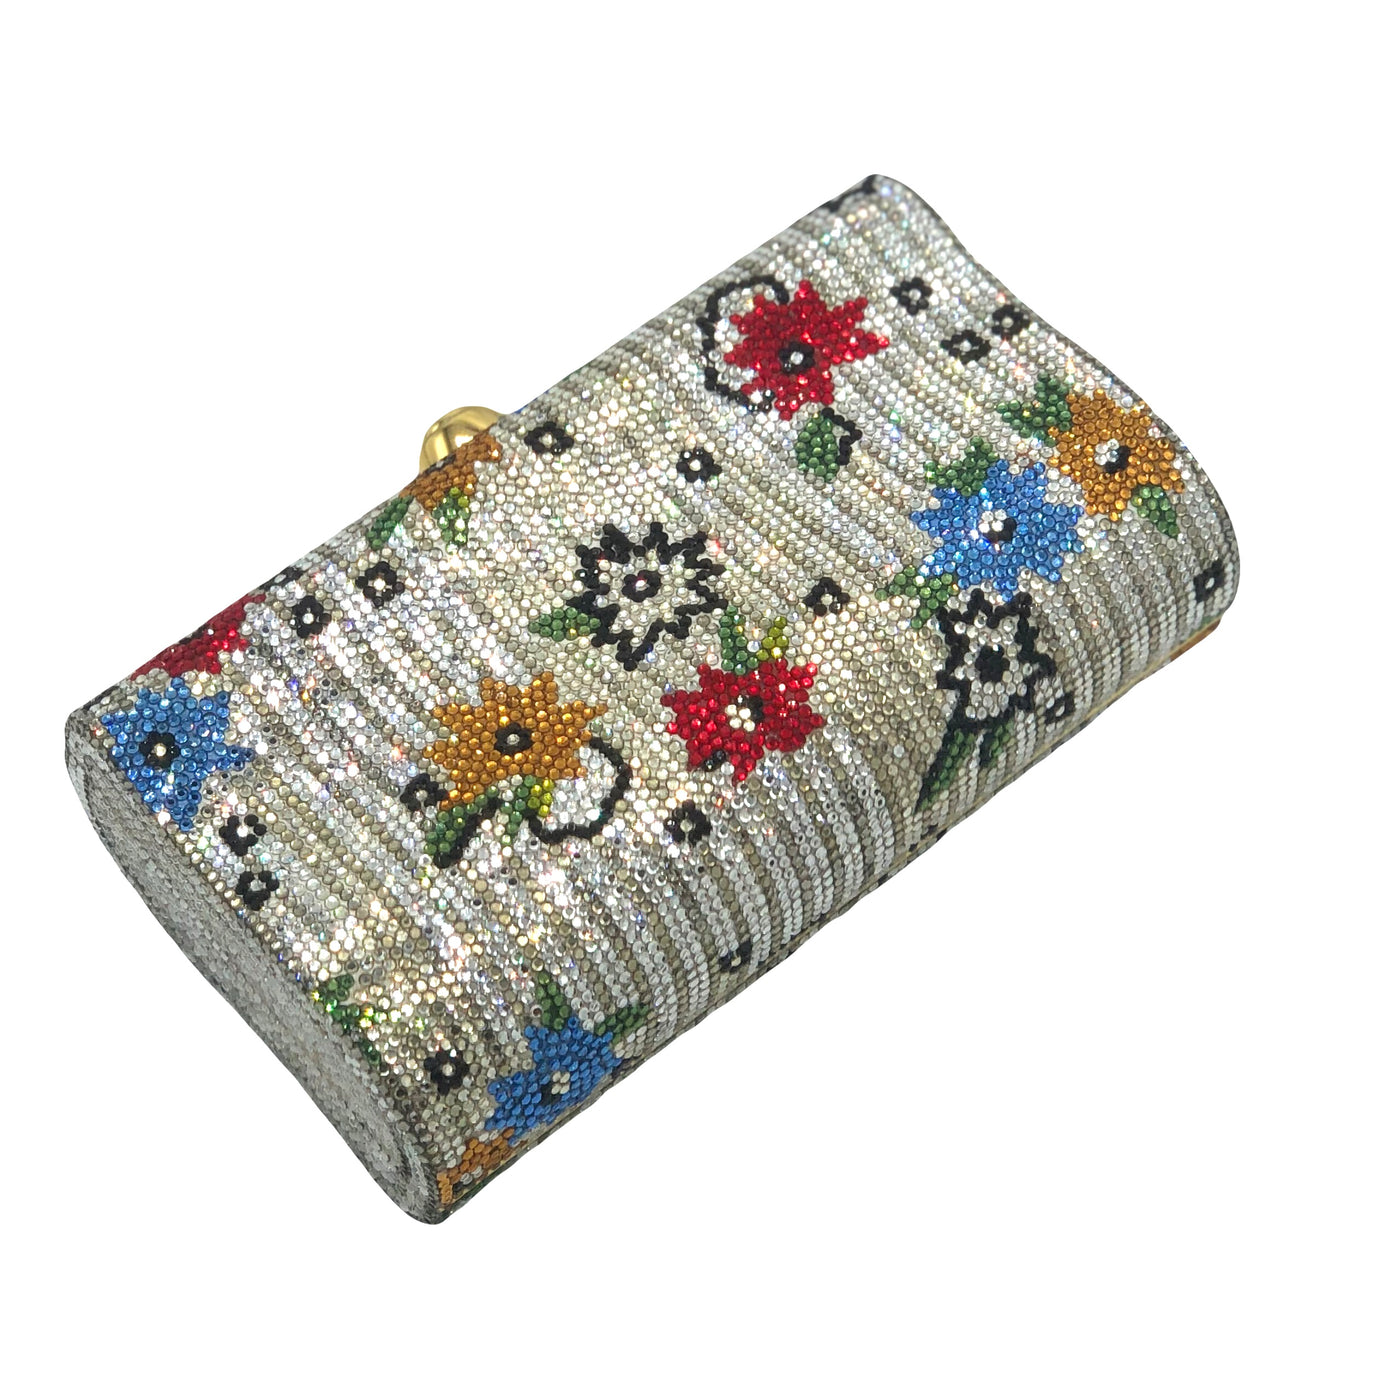 JUDITH LEIBER Floral Swaroski Minaudiere Clutch Bag RRP: £2500